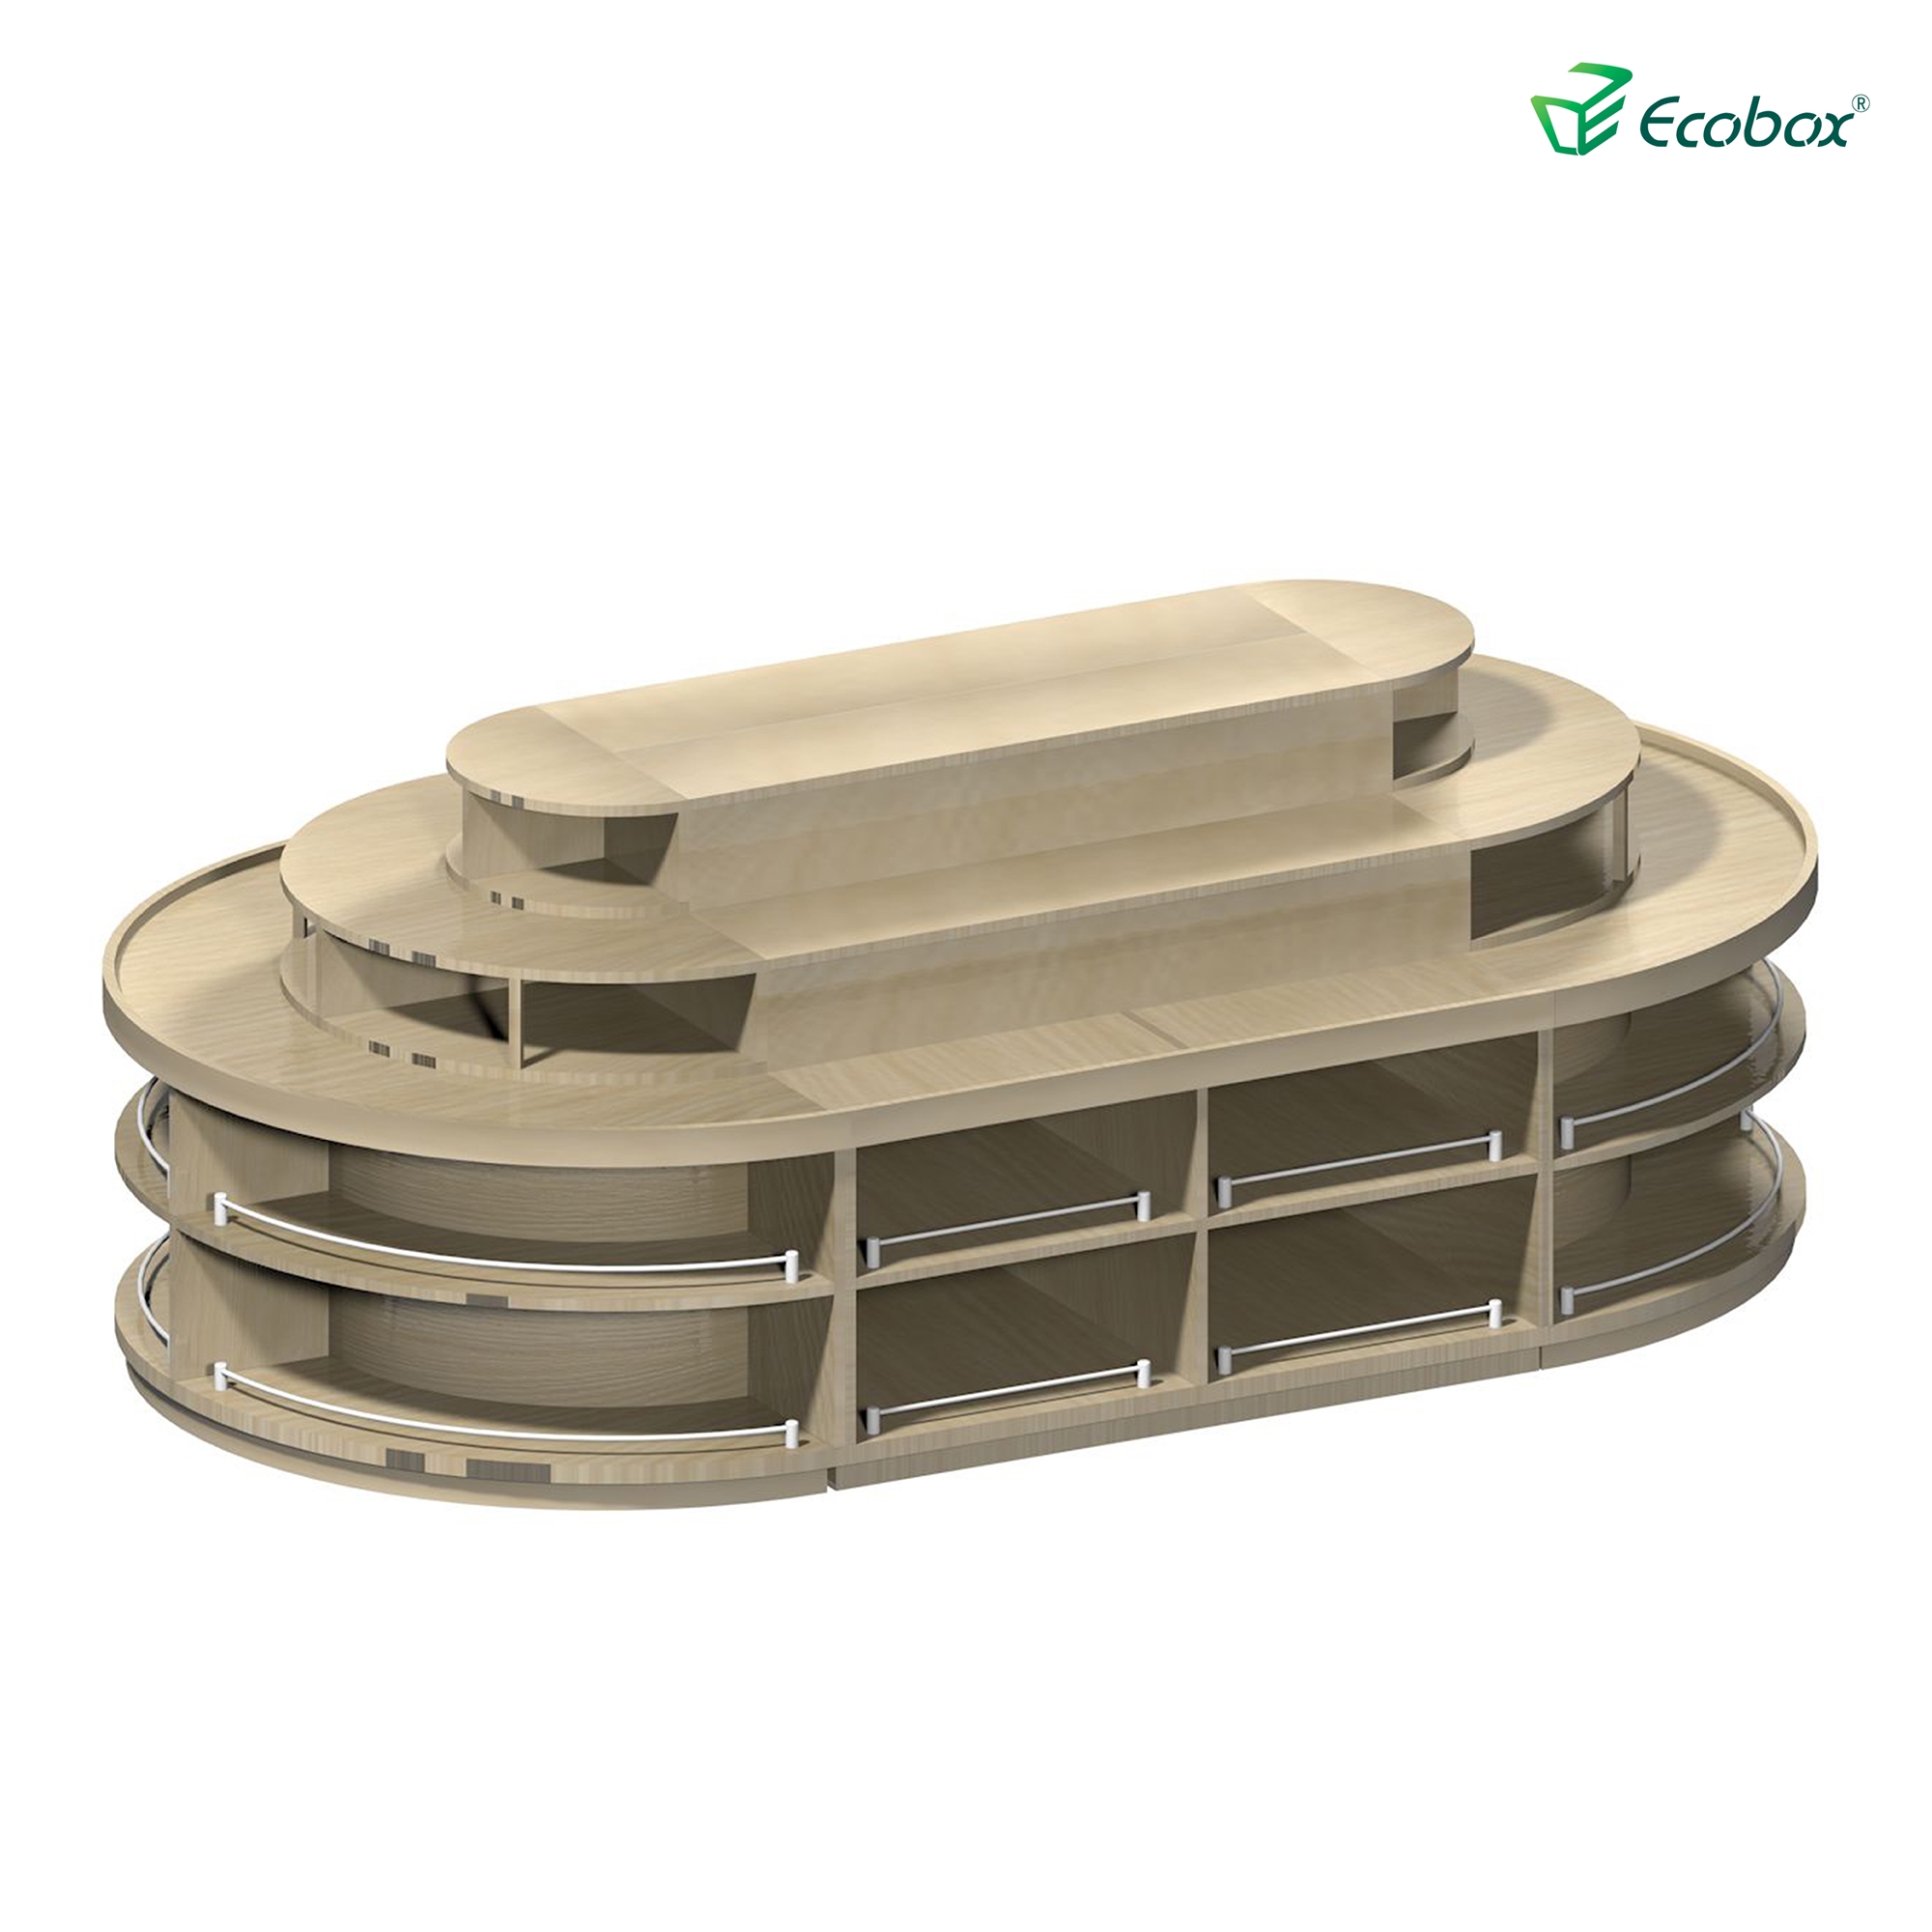 Ecobox G001 series round shelf with Ecobox bulk bins supermarket bulk food displays